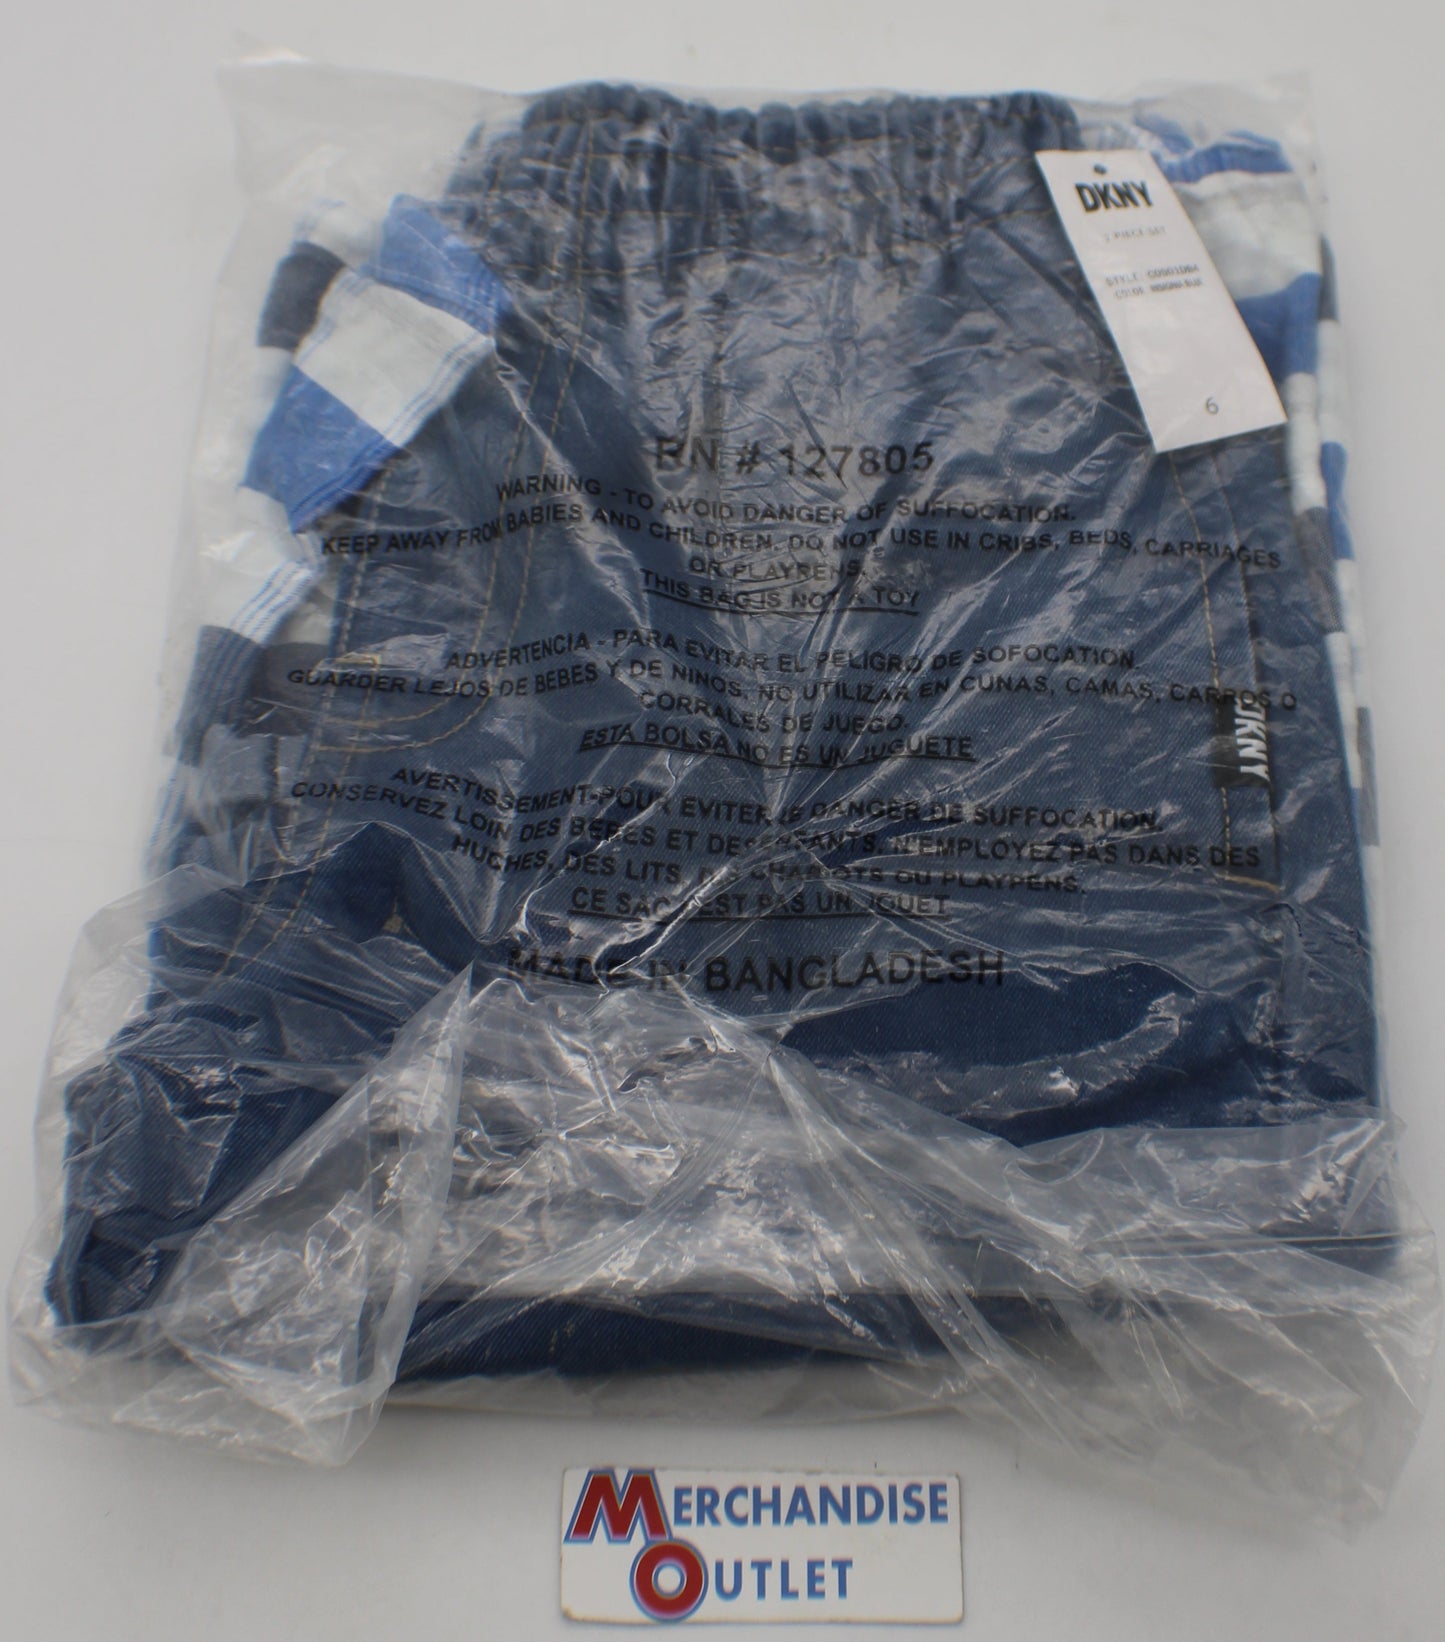 DKNY Boys' Shorts and Shirt Set, Blue Plaid, Size 6